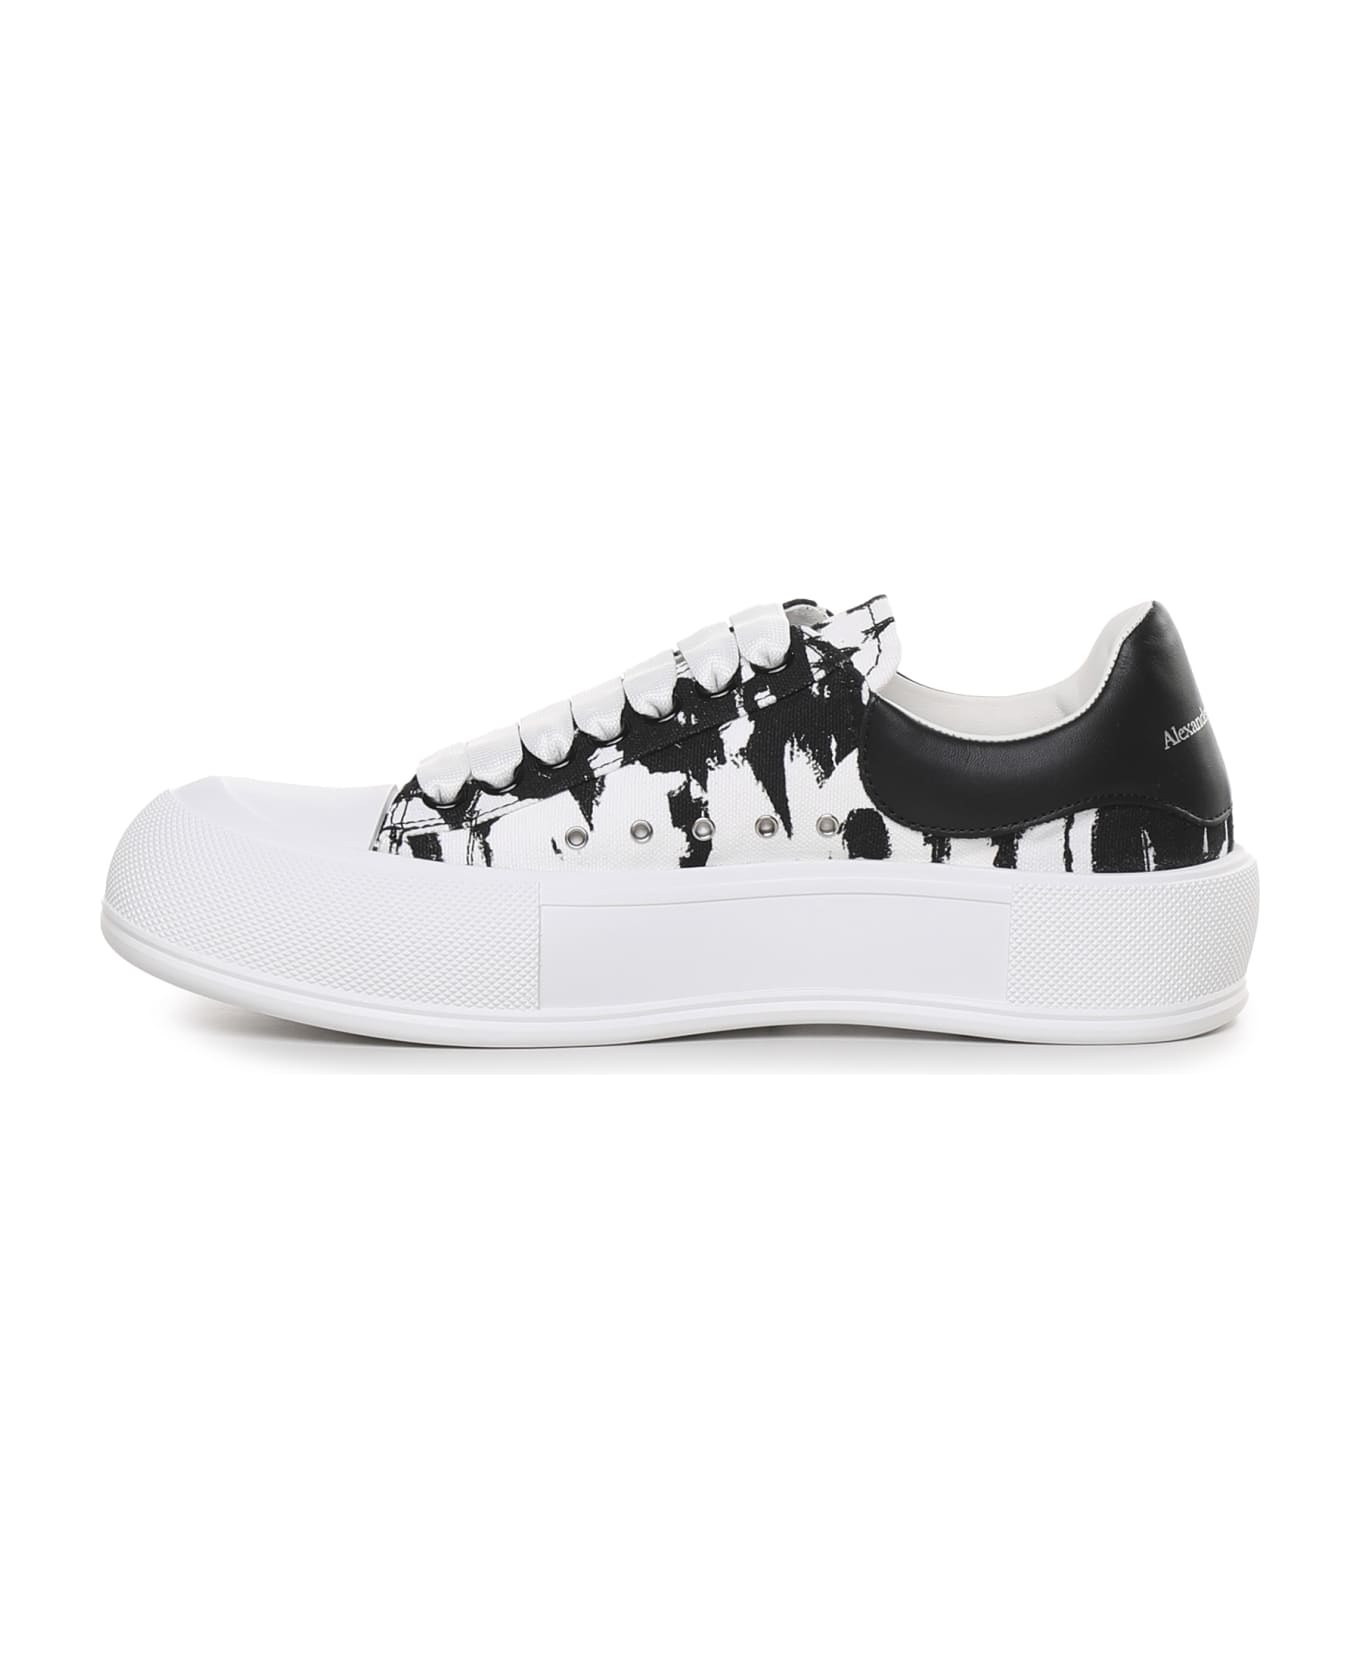 Alexander McQueen Sneakers Deck Plimsoll In Calfskin - White, black スニーカー